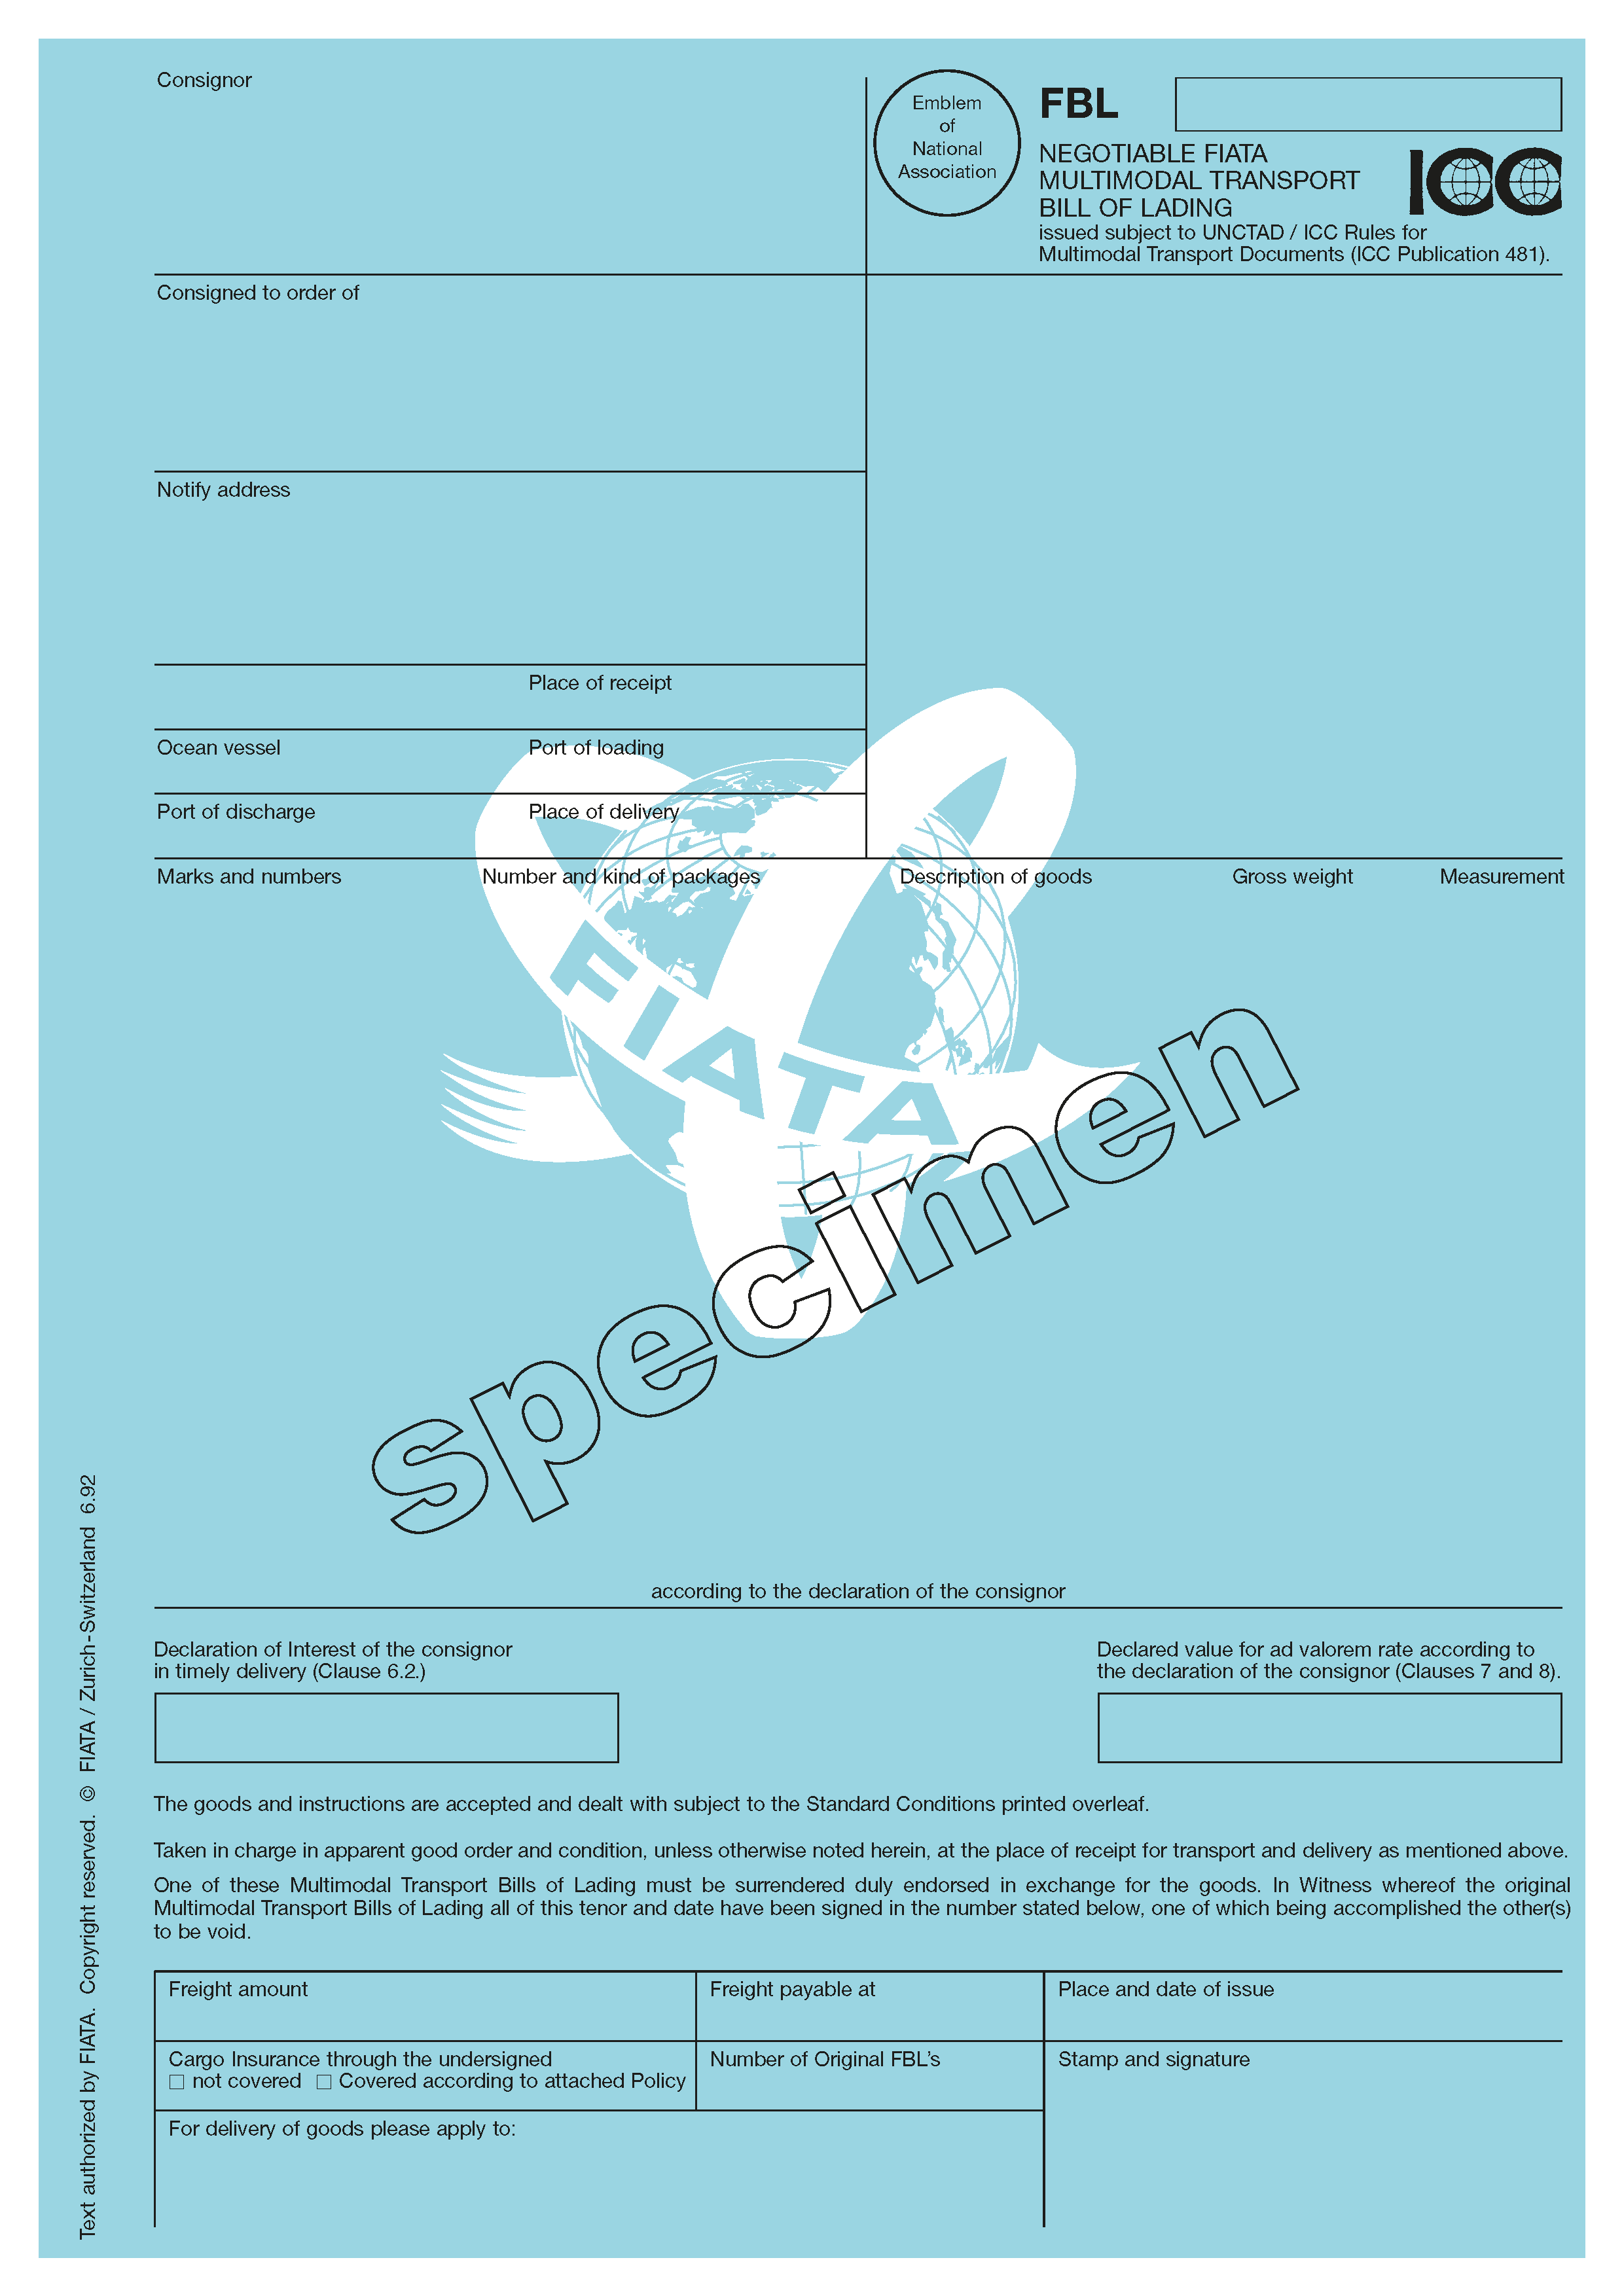 FIATA Bill of Lading - specimen